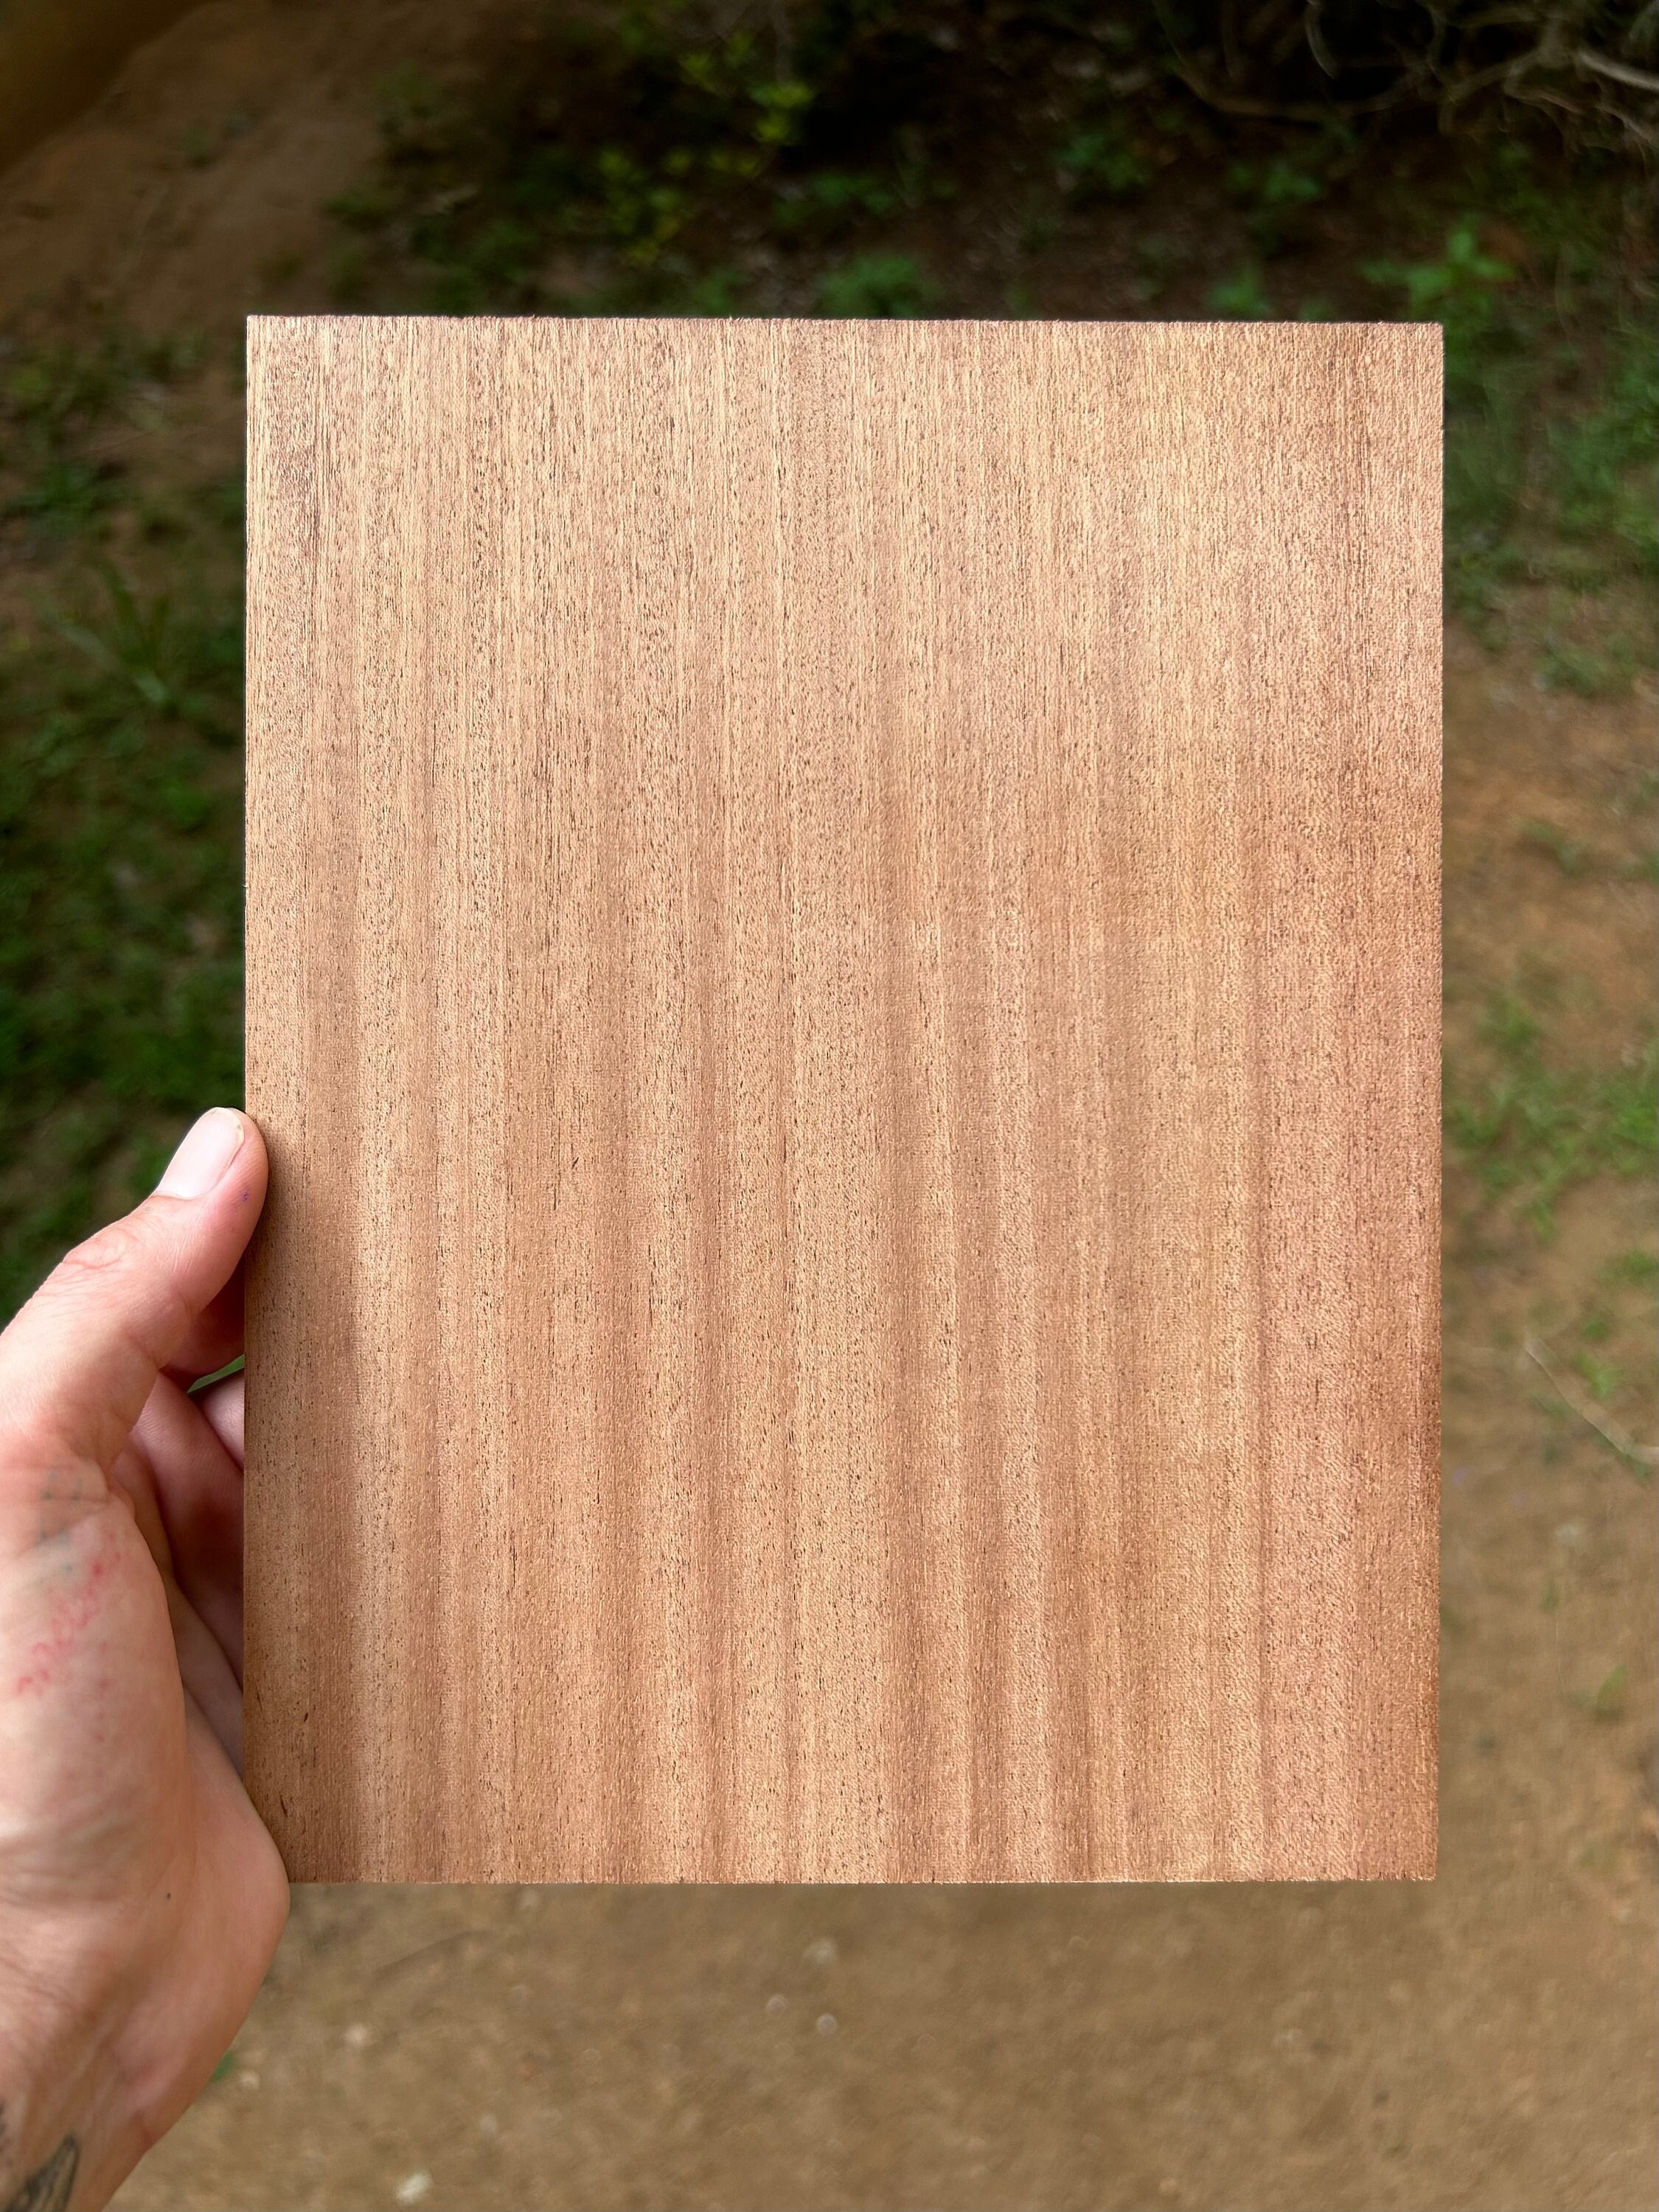 Paneles de madera sin terminar para pintar, cuadrados de madera en blanco  para manualidades, vertido artístico (11 x 14 pulgadas, paquete de 4)